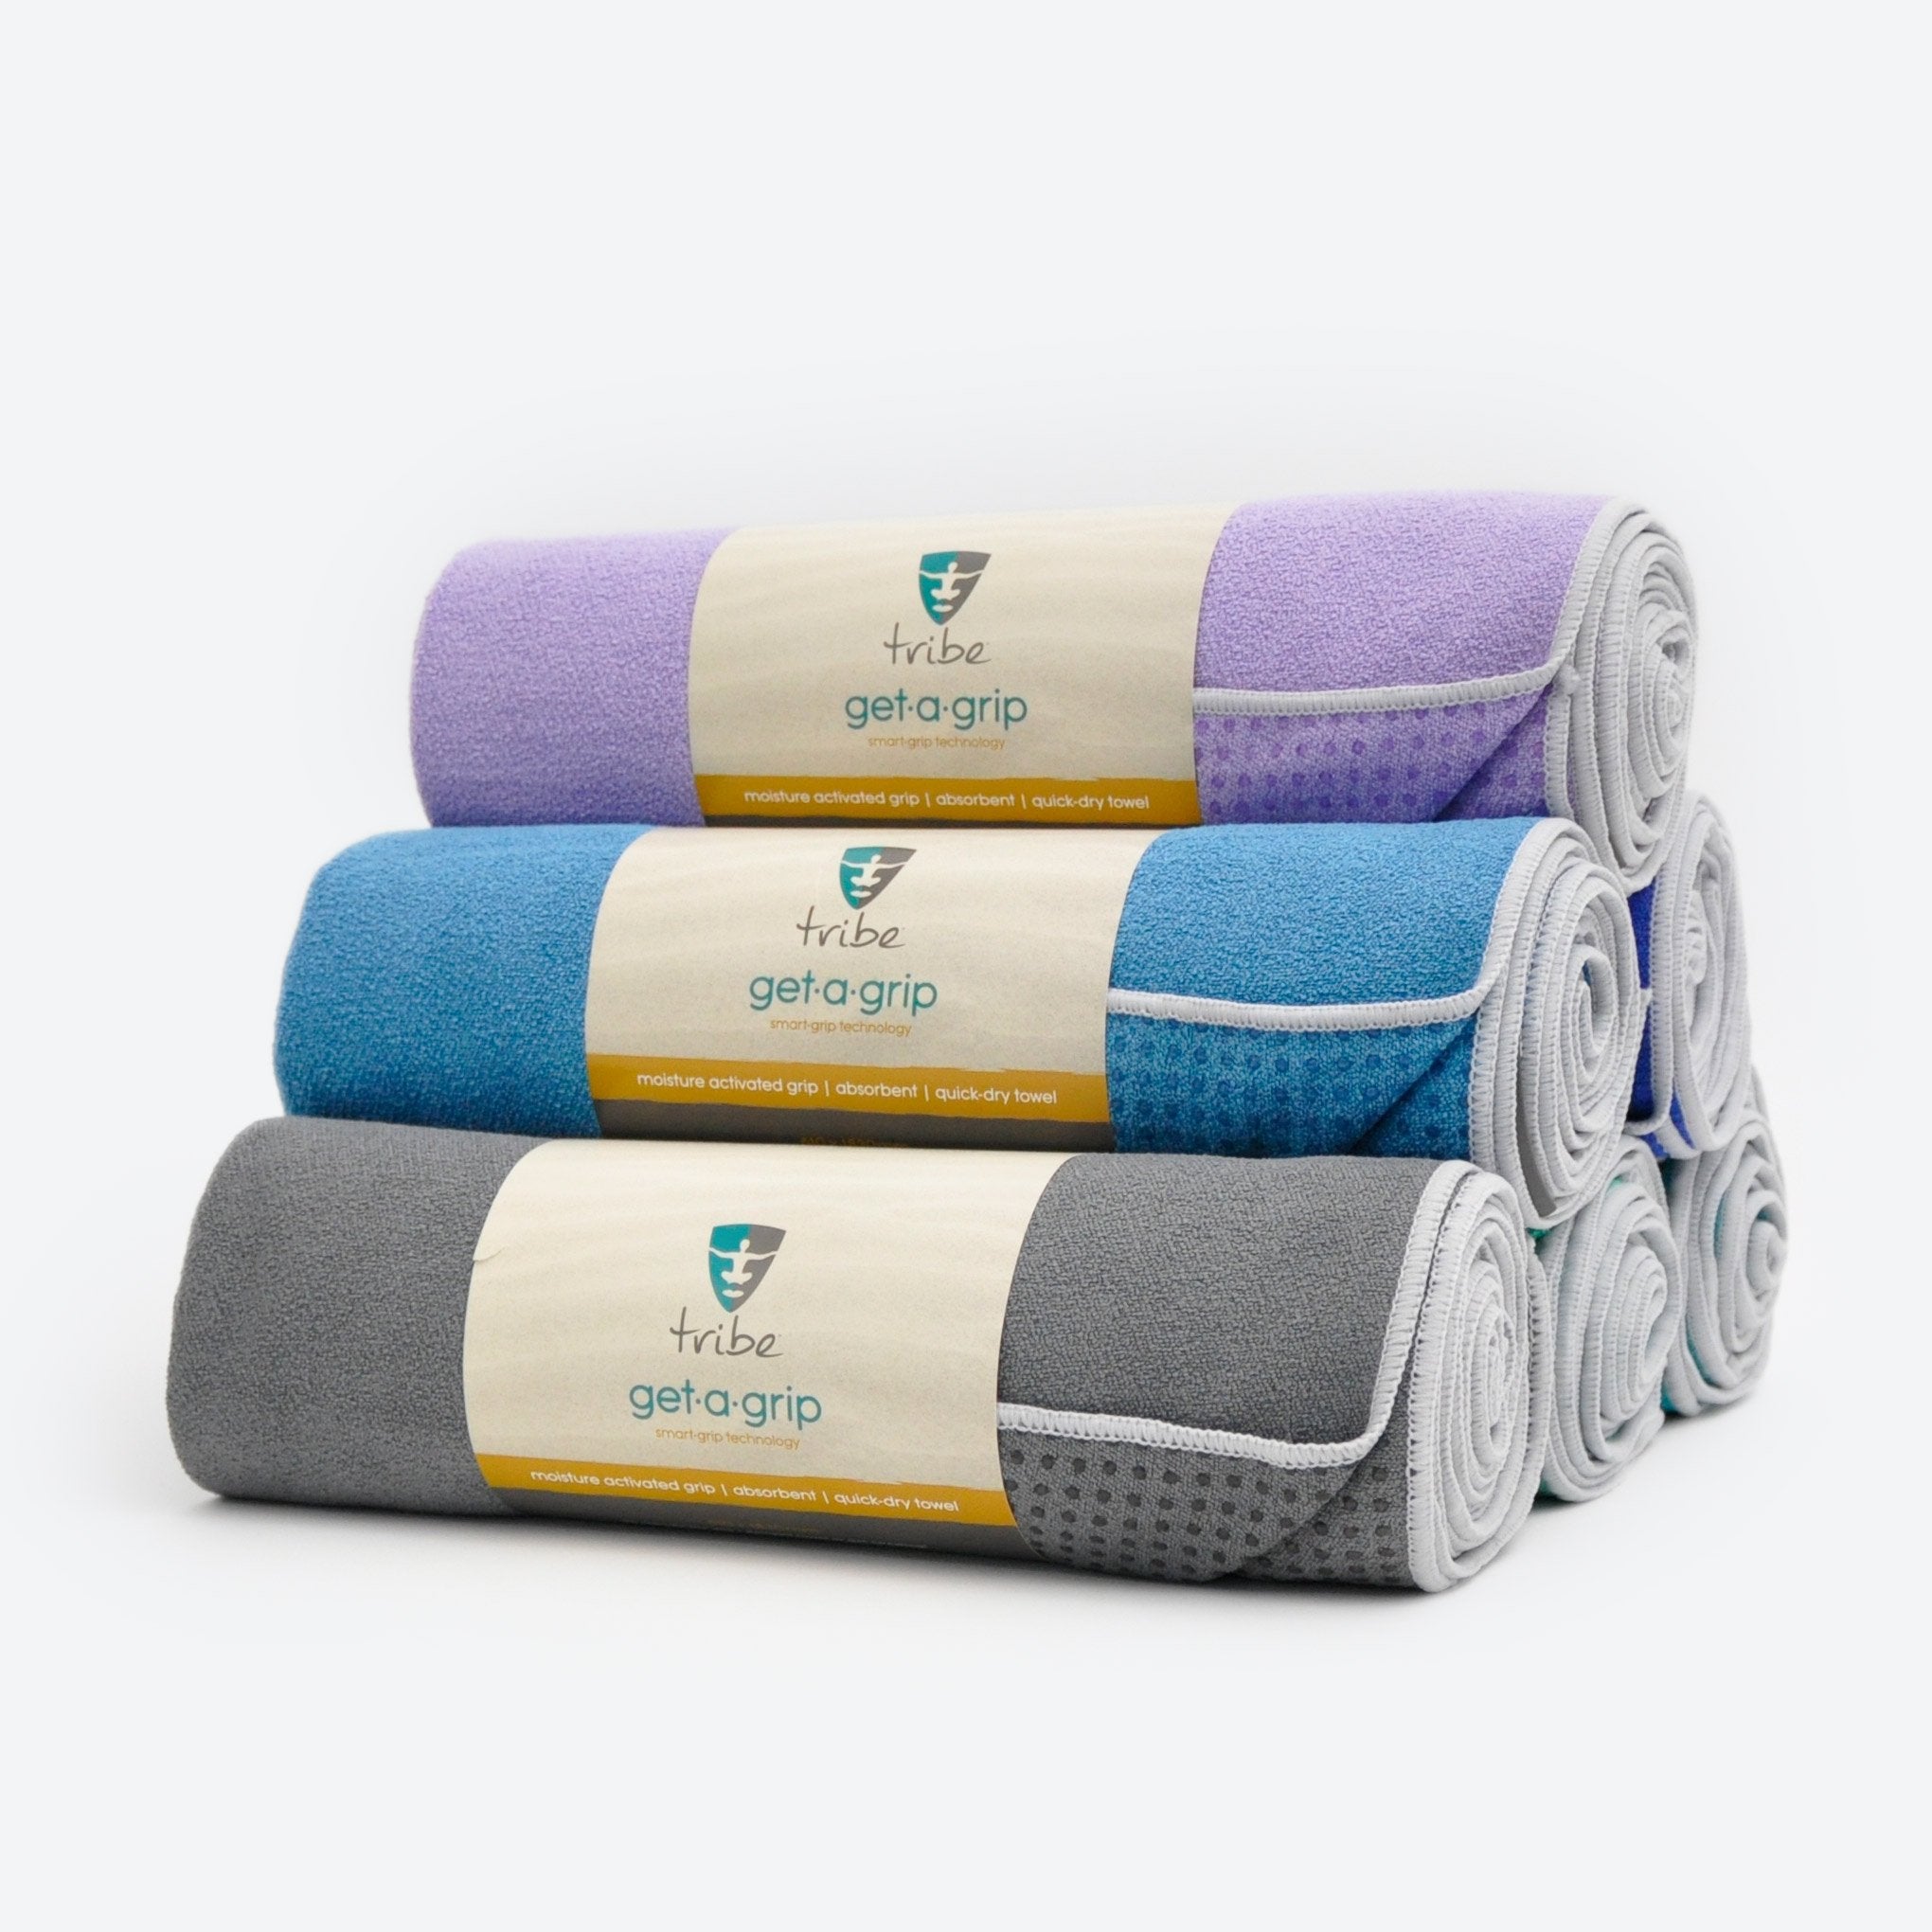 Manduka eQua Yoga Mat Towel Maldive